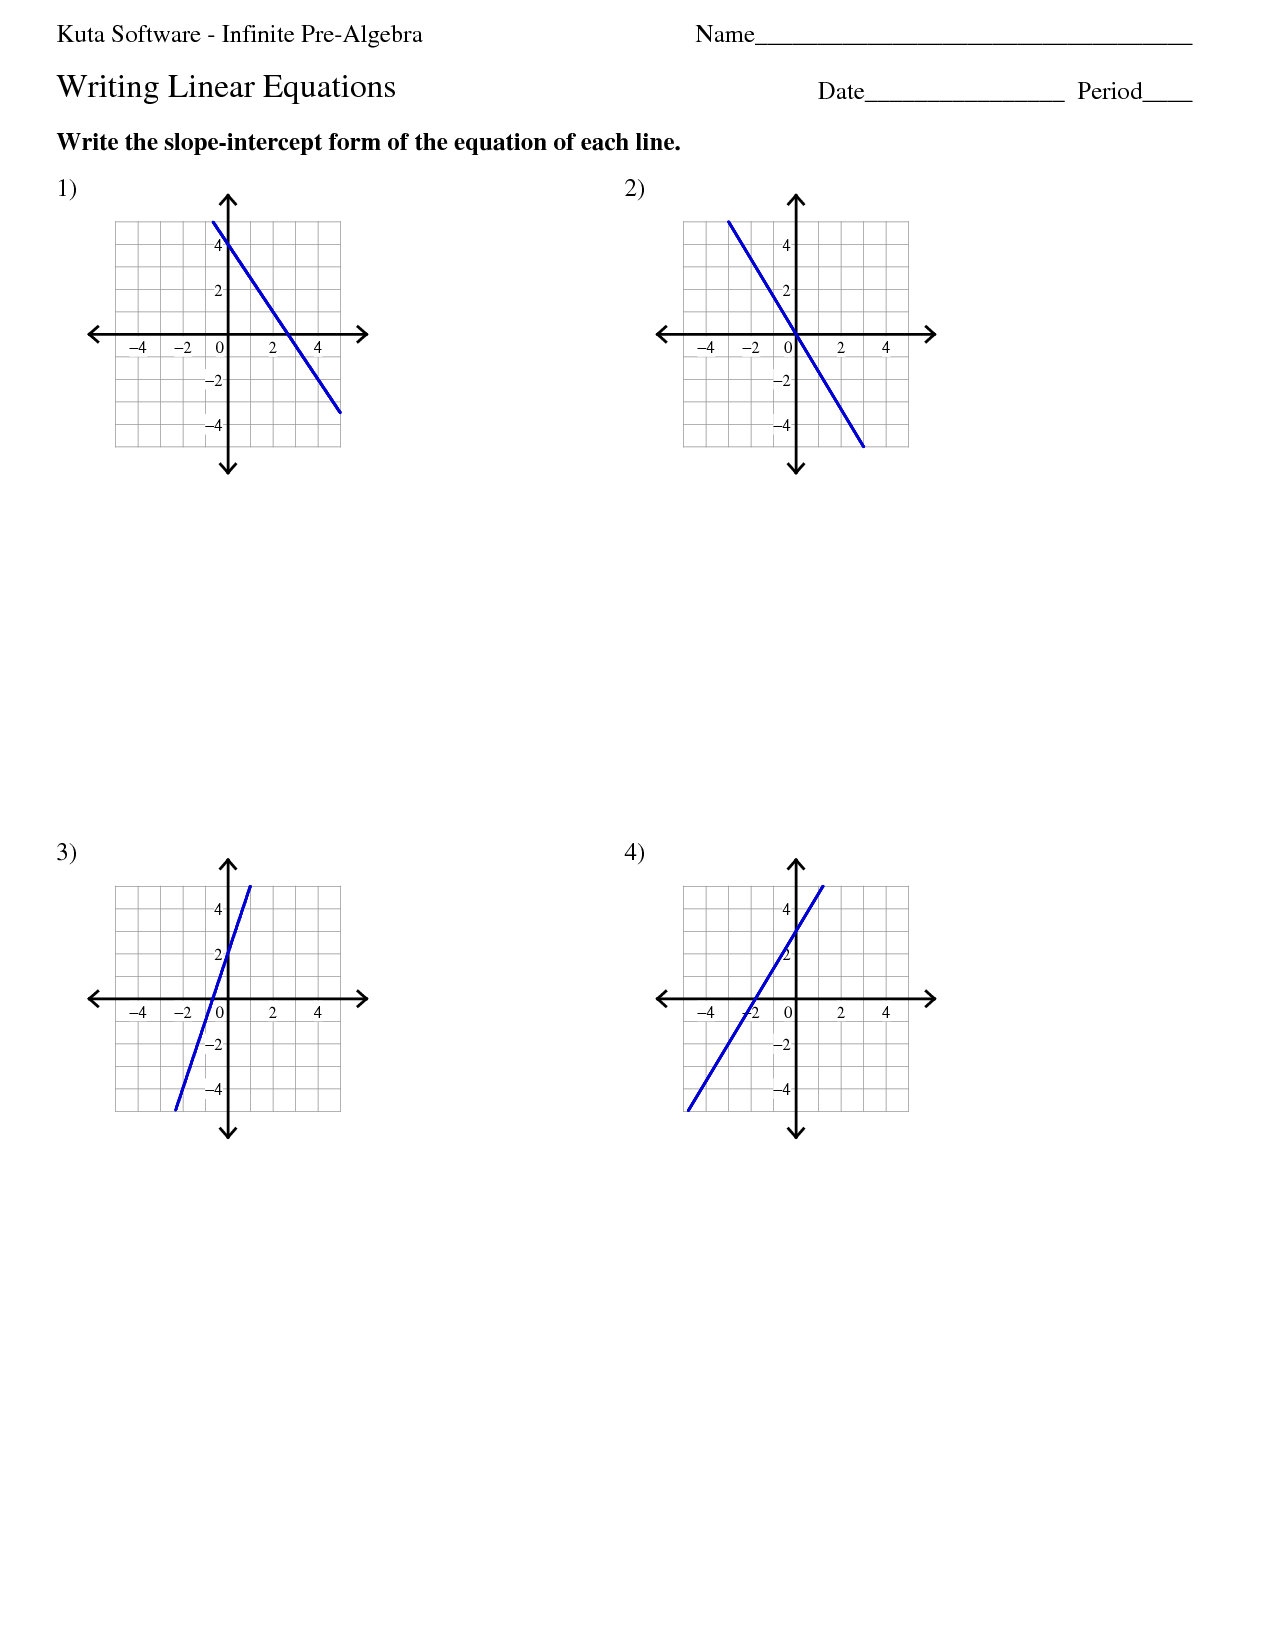 Algebra 1 Point Slope Form Worksheet Key - writing equations in slope